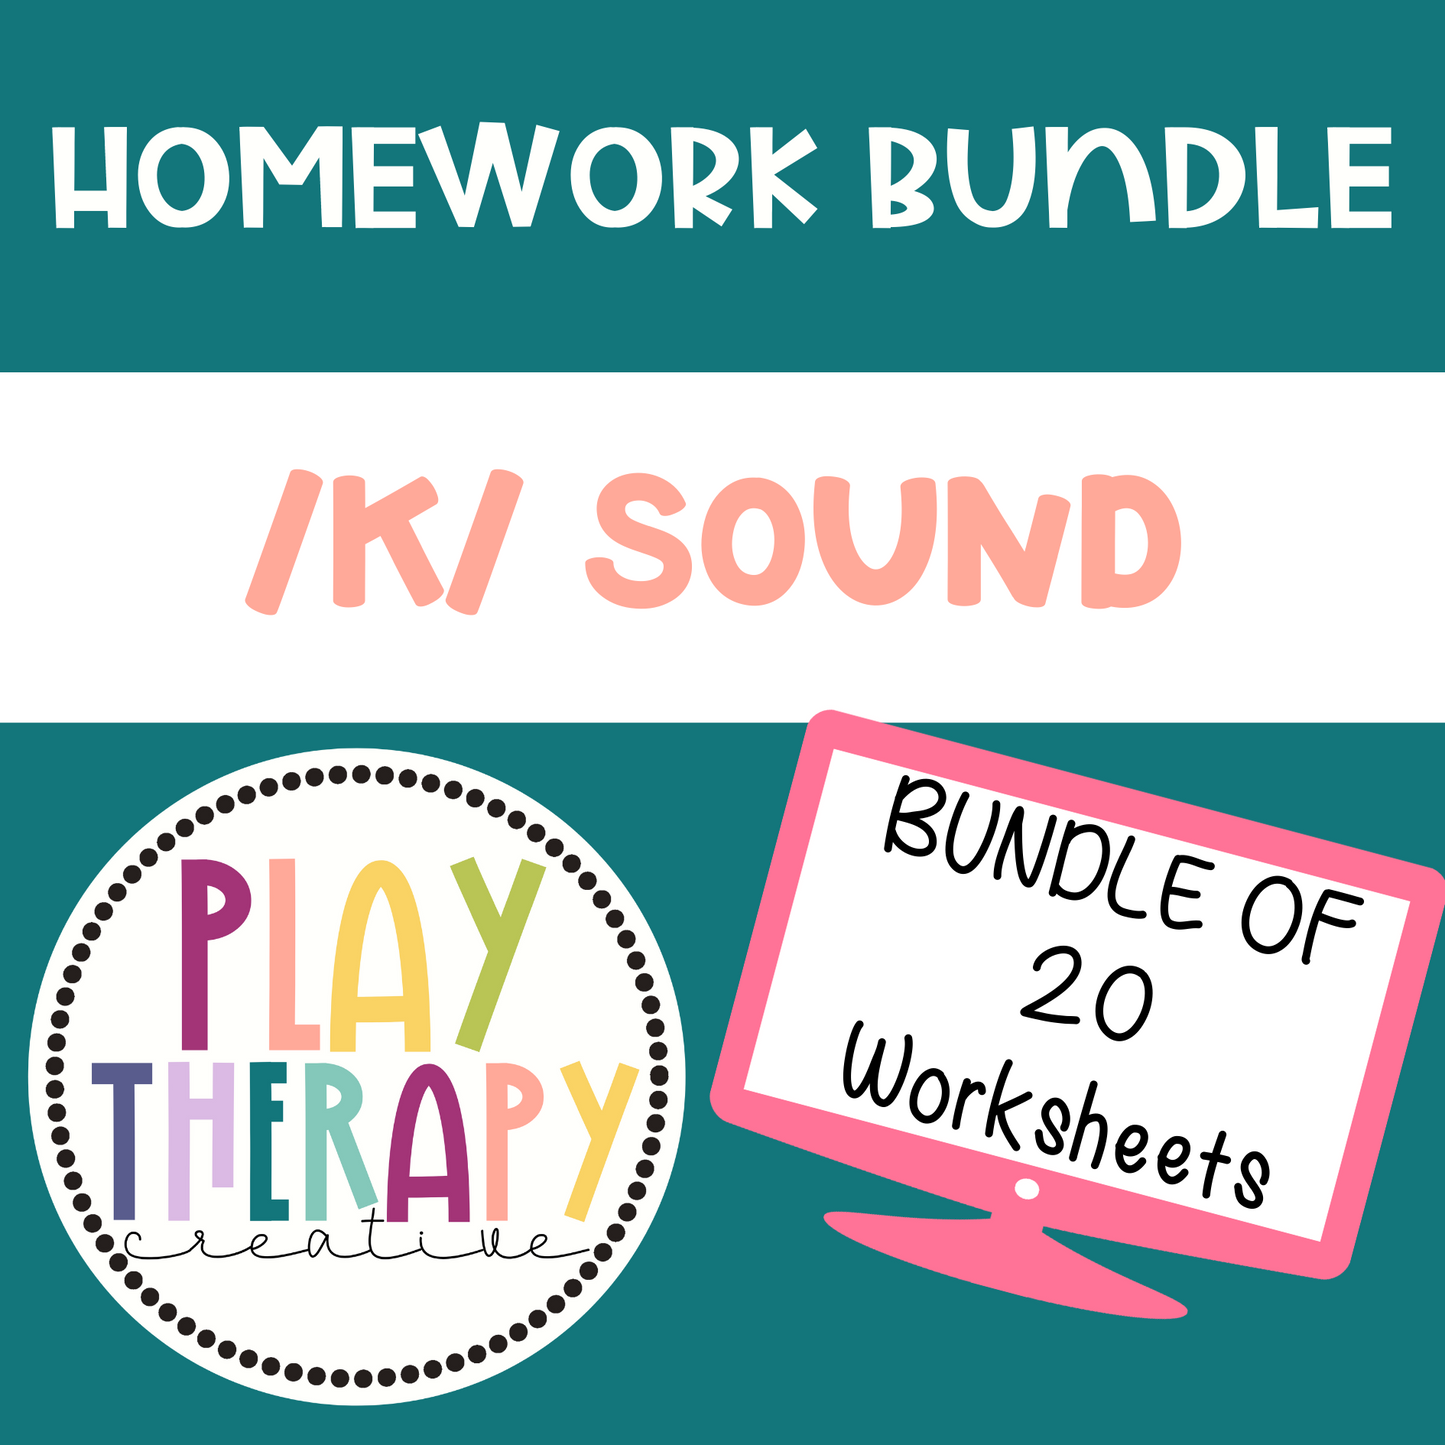 Summer Homework for Articulation Speech Therapy /K/ sound